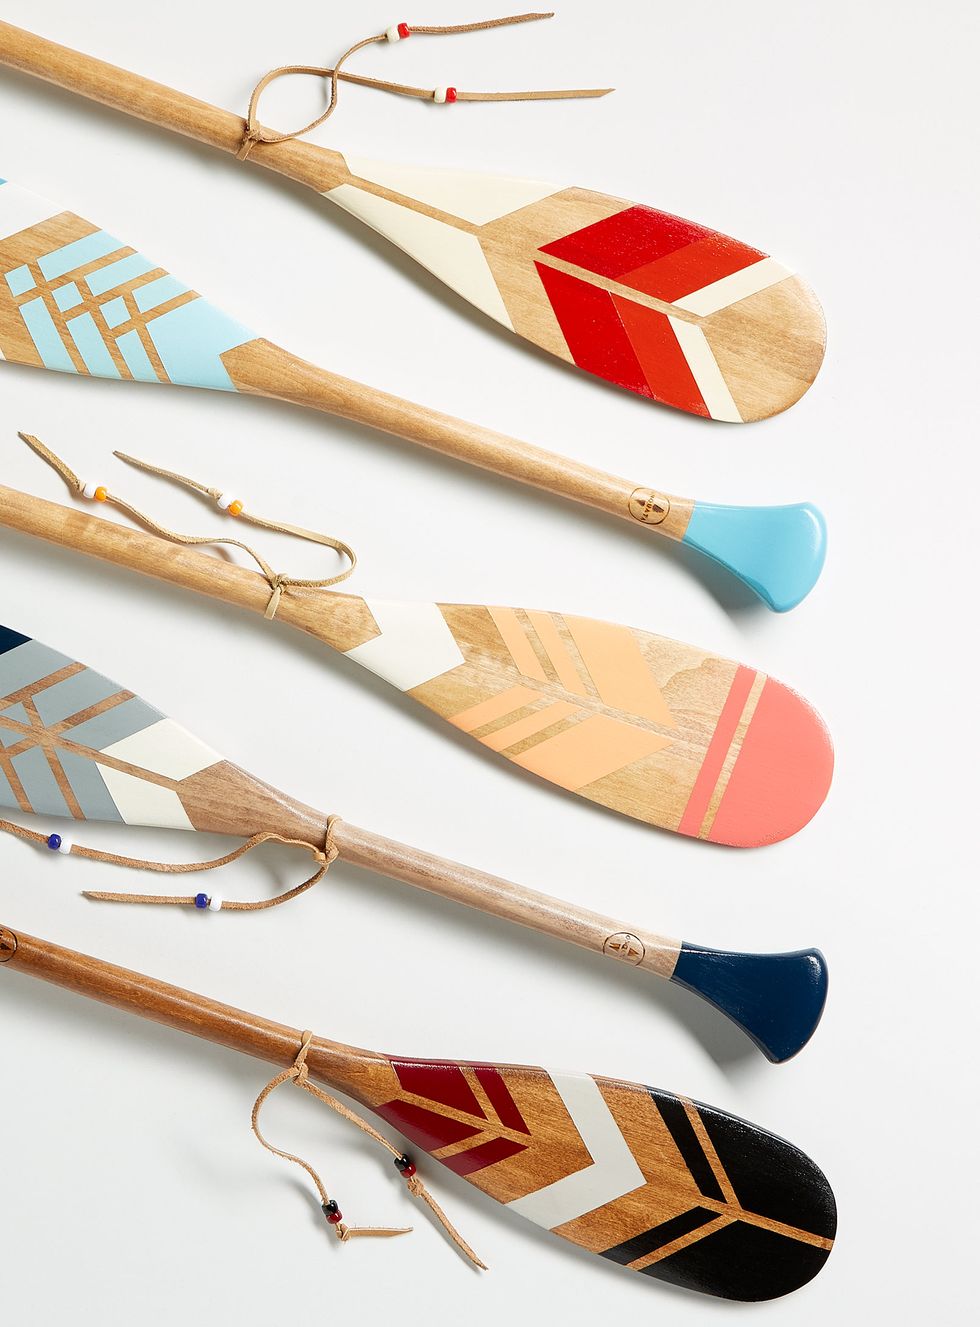 series of paddles